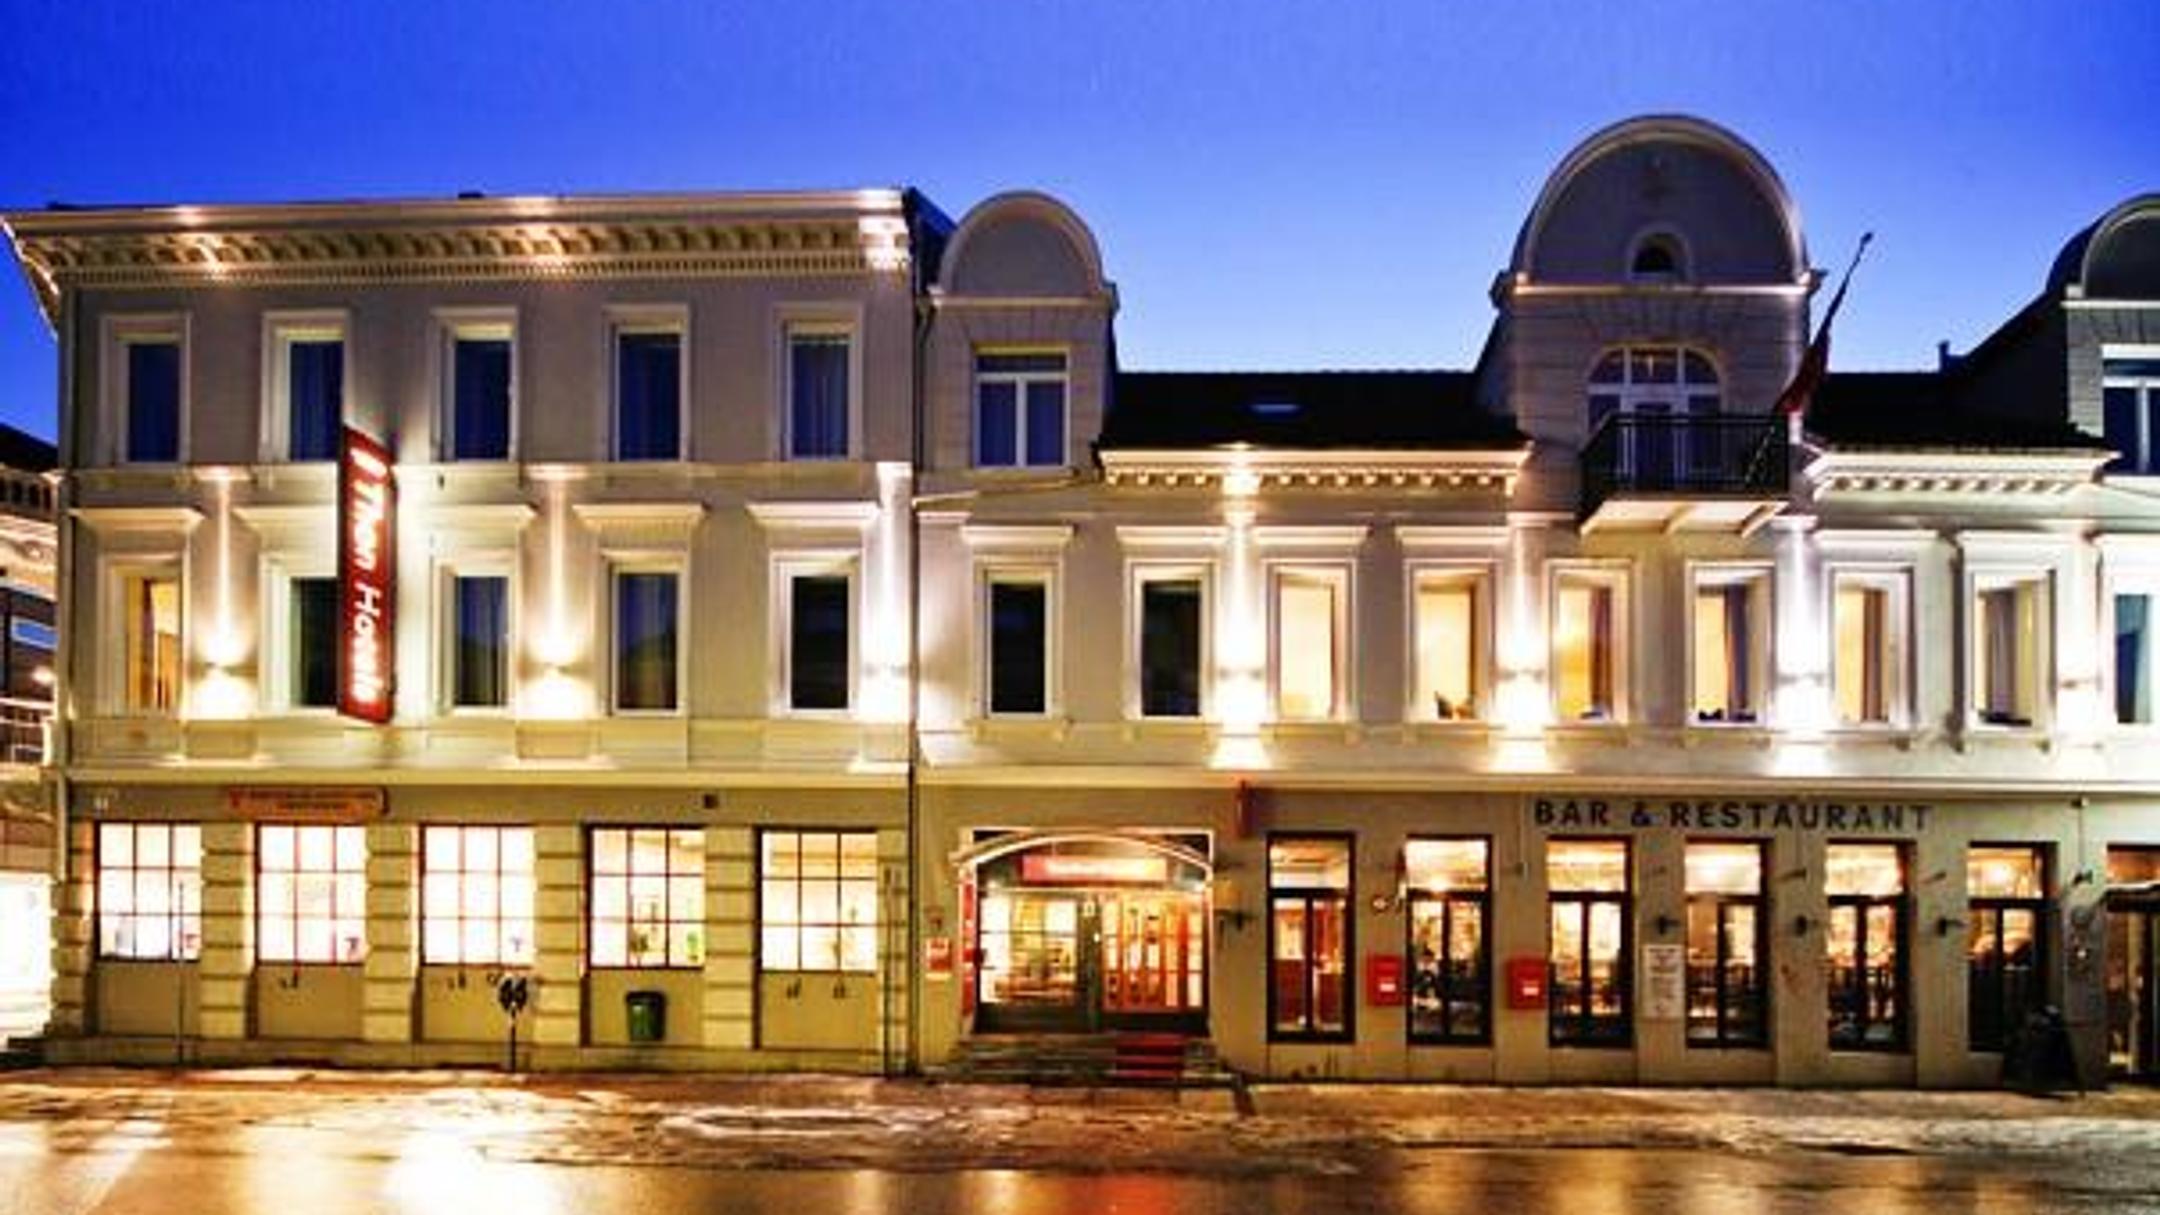 Thon Partner Hotel Parken, Kristiansand, Norway - Compare Deals